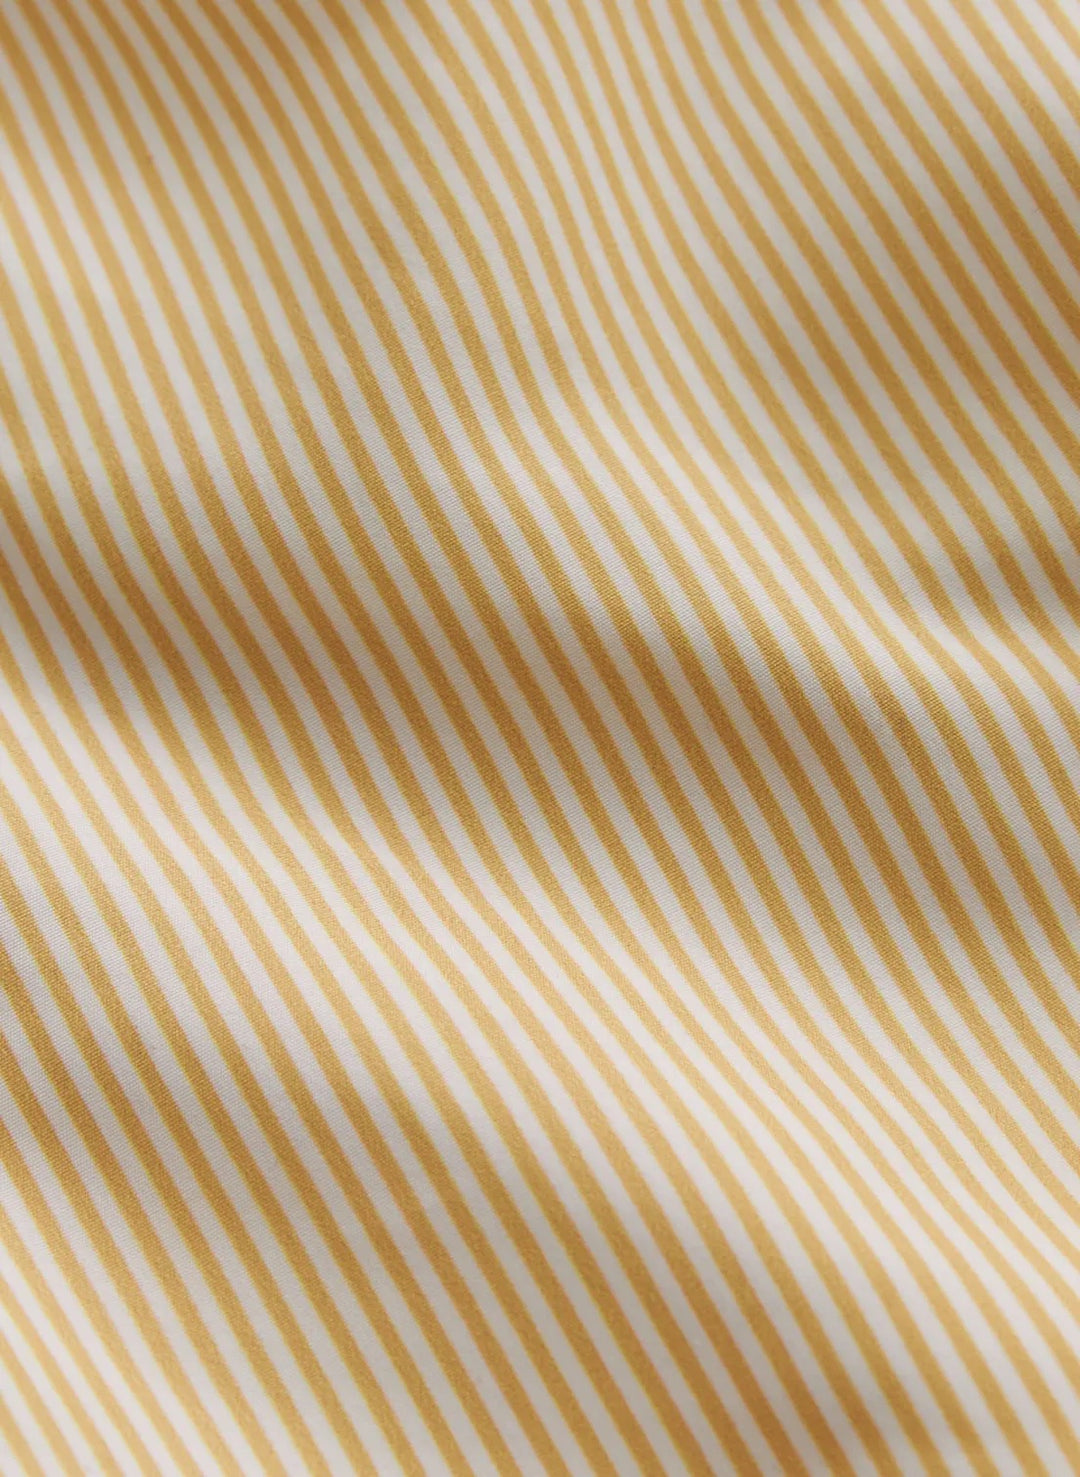 Stripe Bathing Trunks Yellow